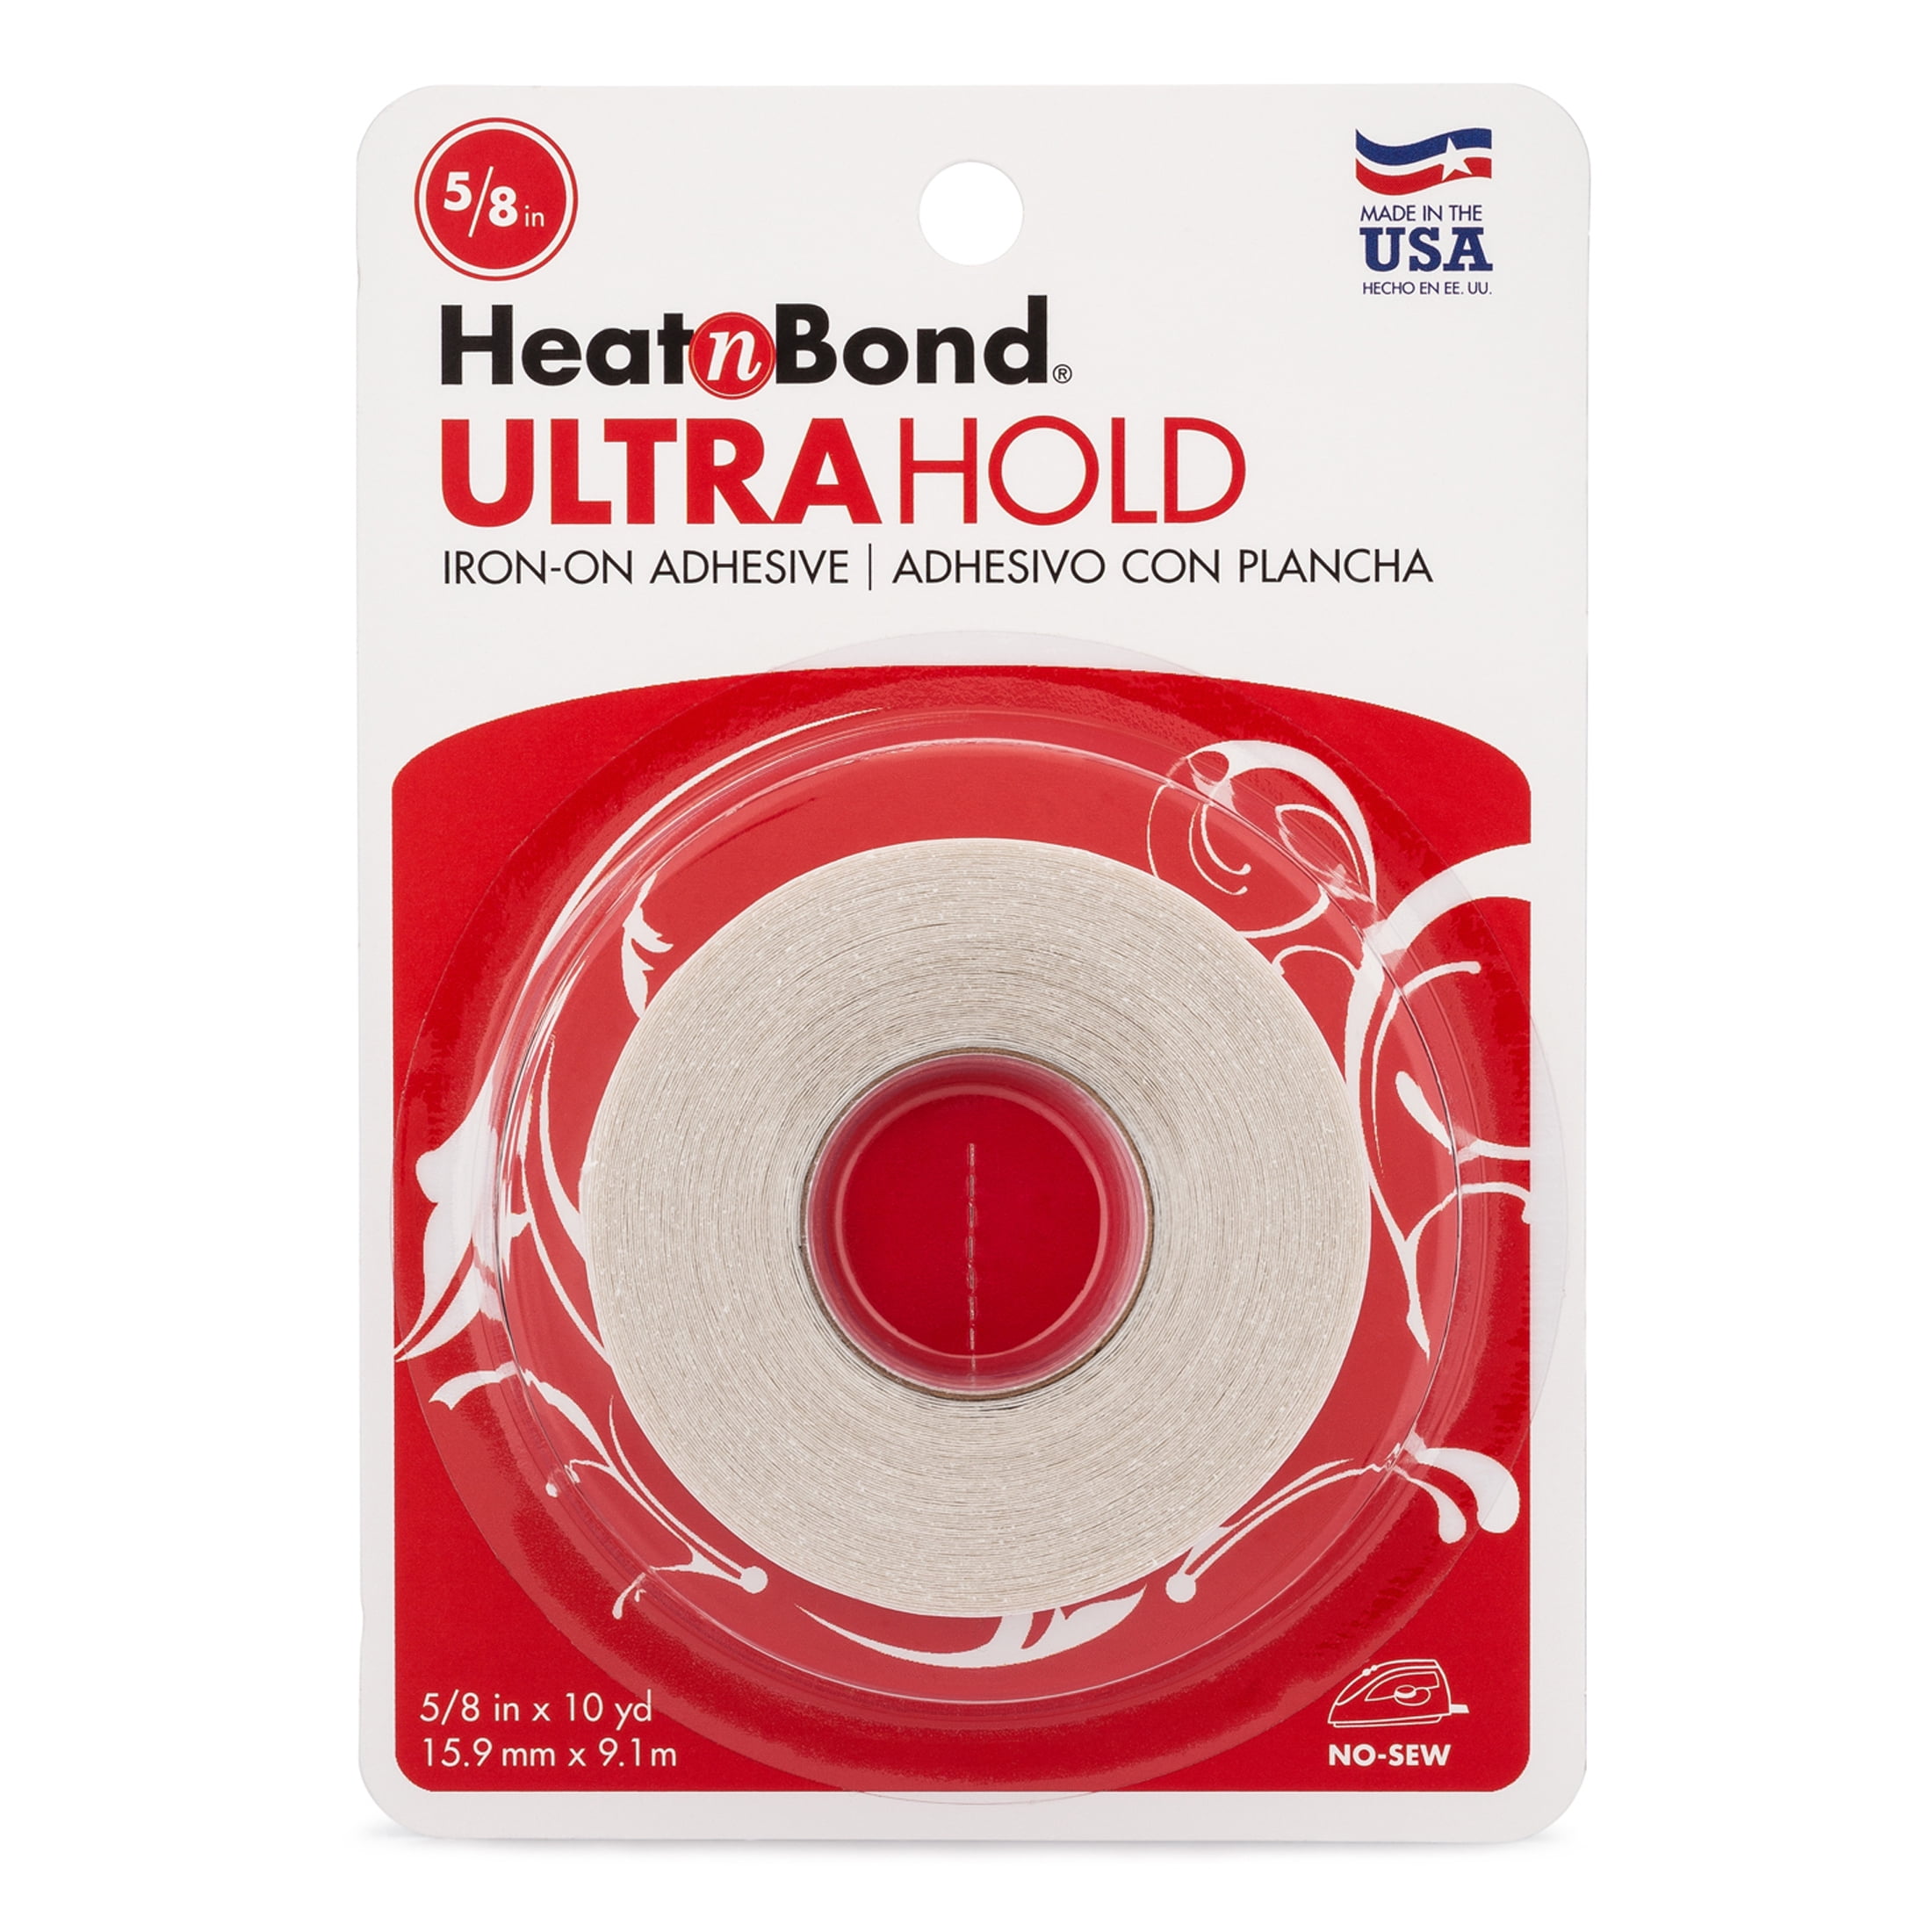 HeatnBond Ultrahold Iron-on Adhesive Tape, 5/8 inch x 10 Yards, White